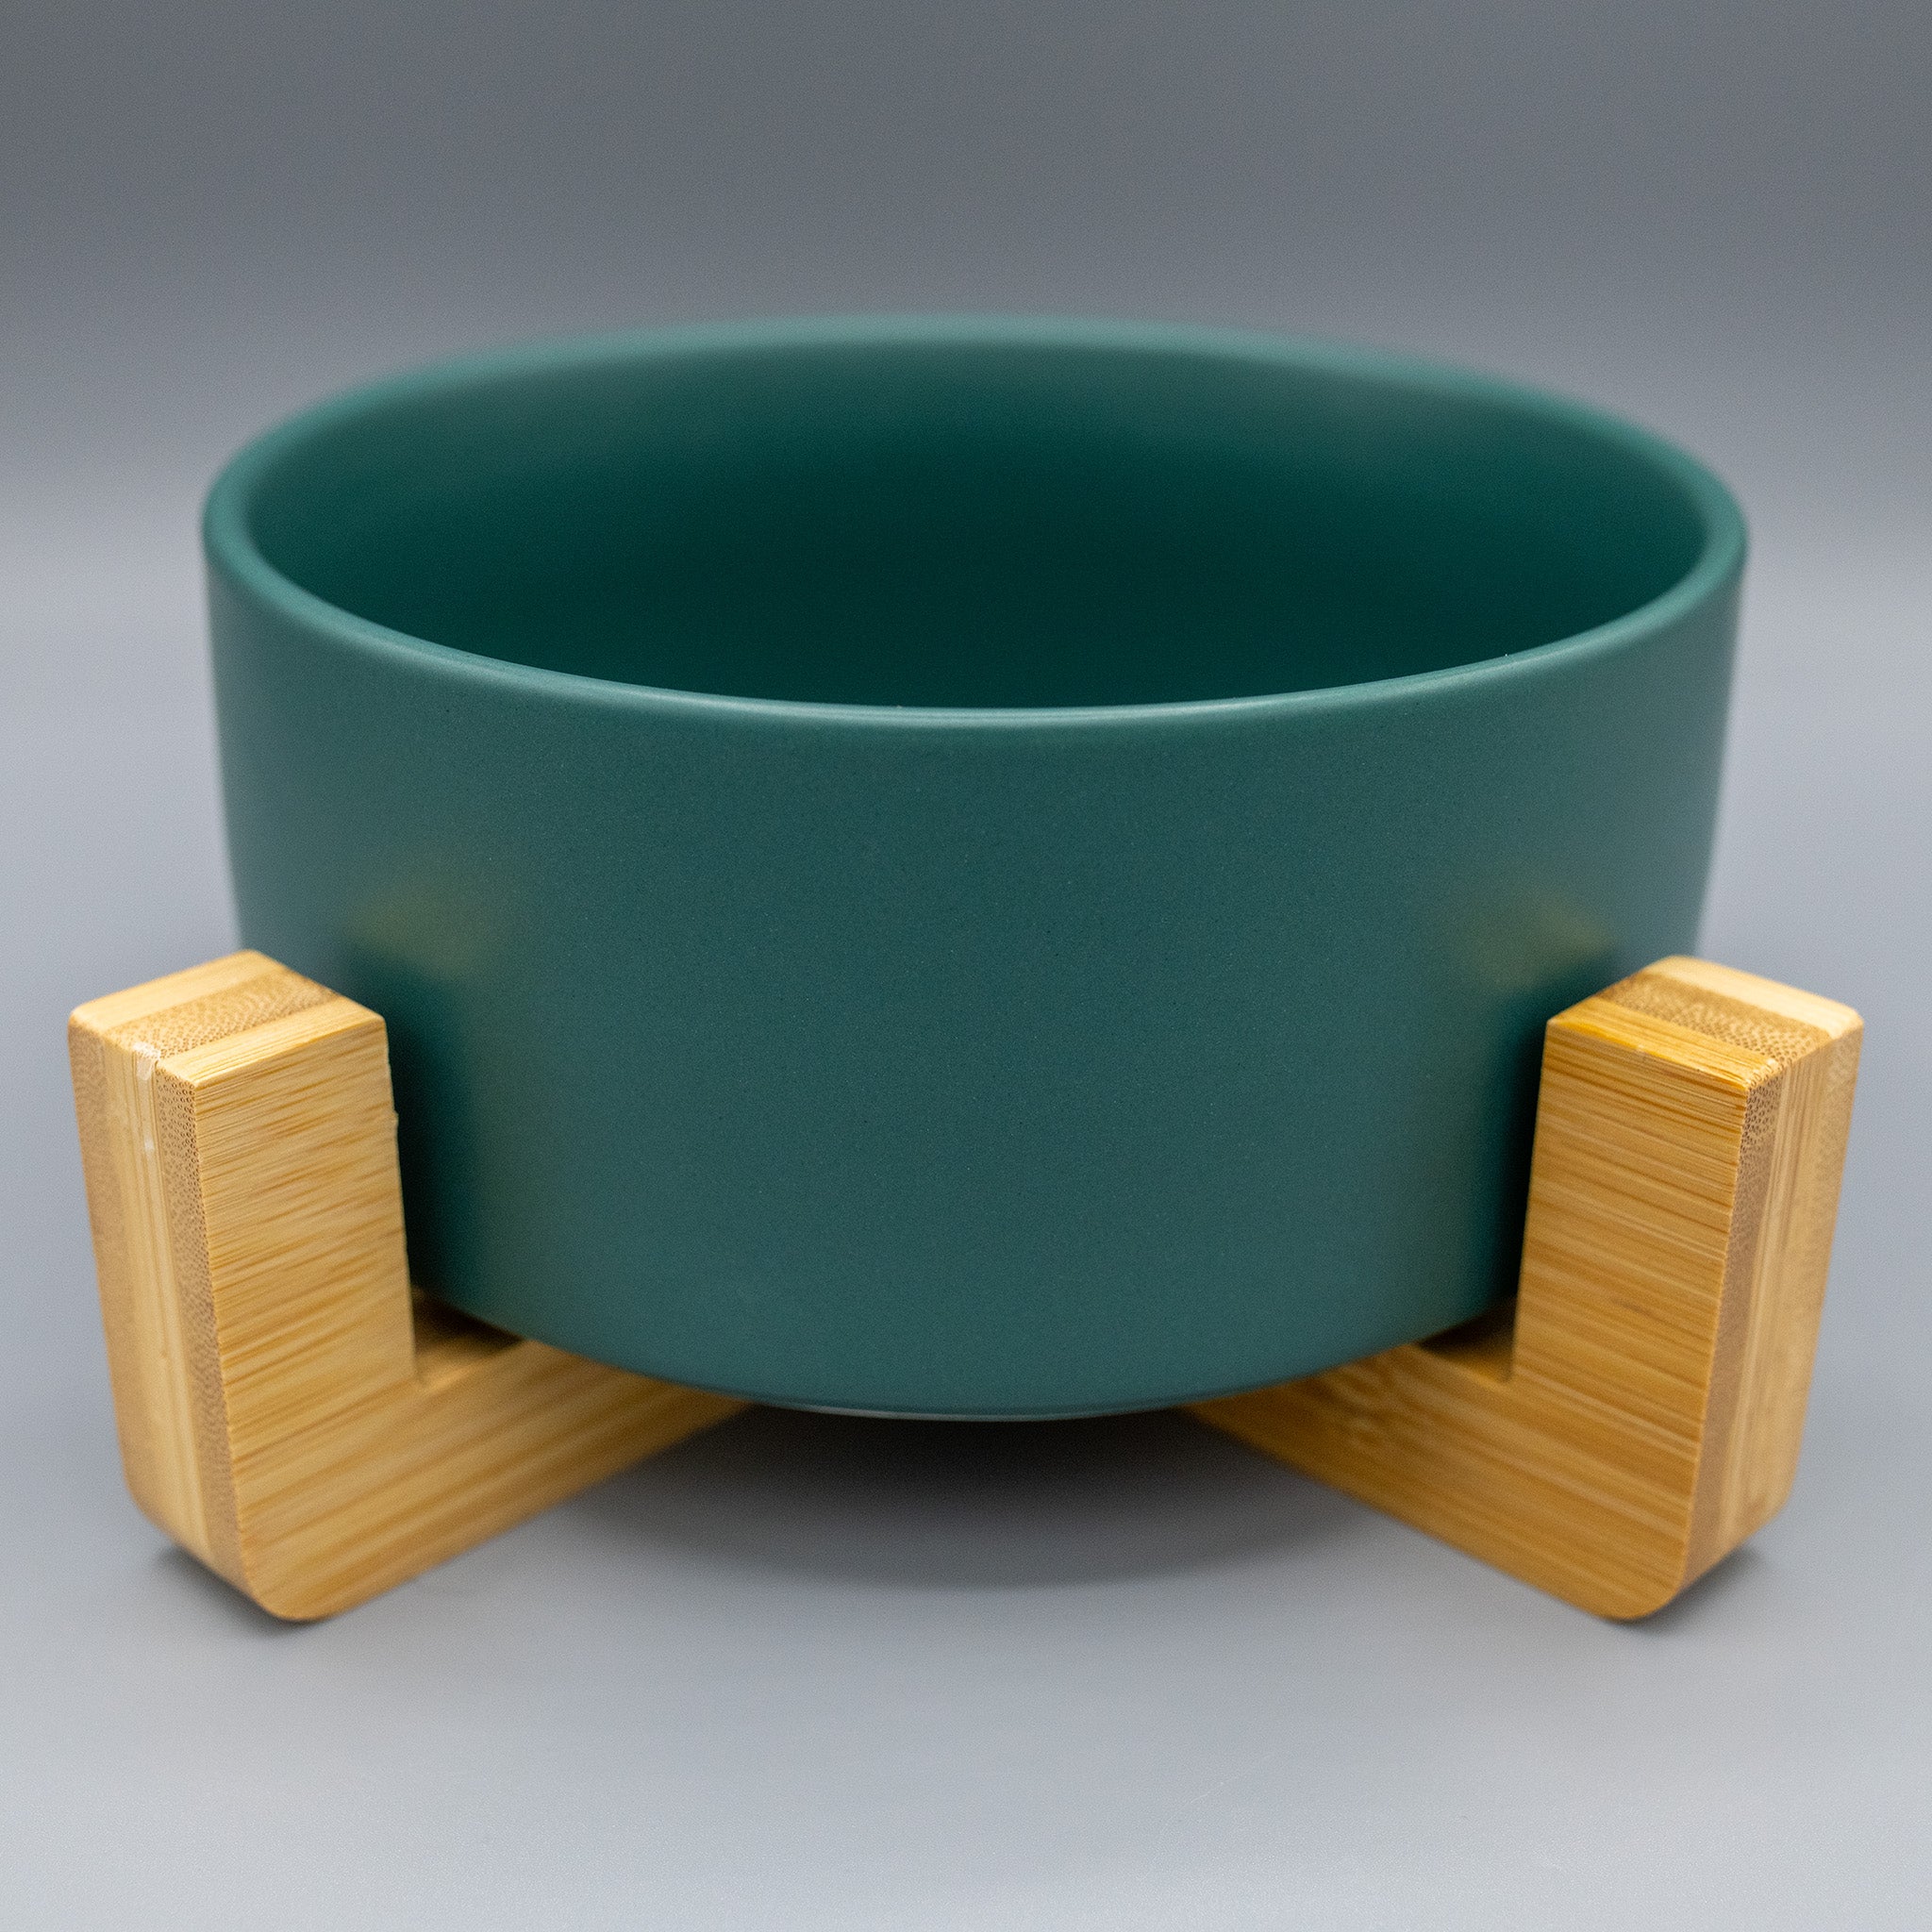 Ceramic bowl John with bamboo frame